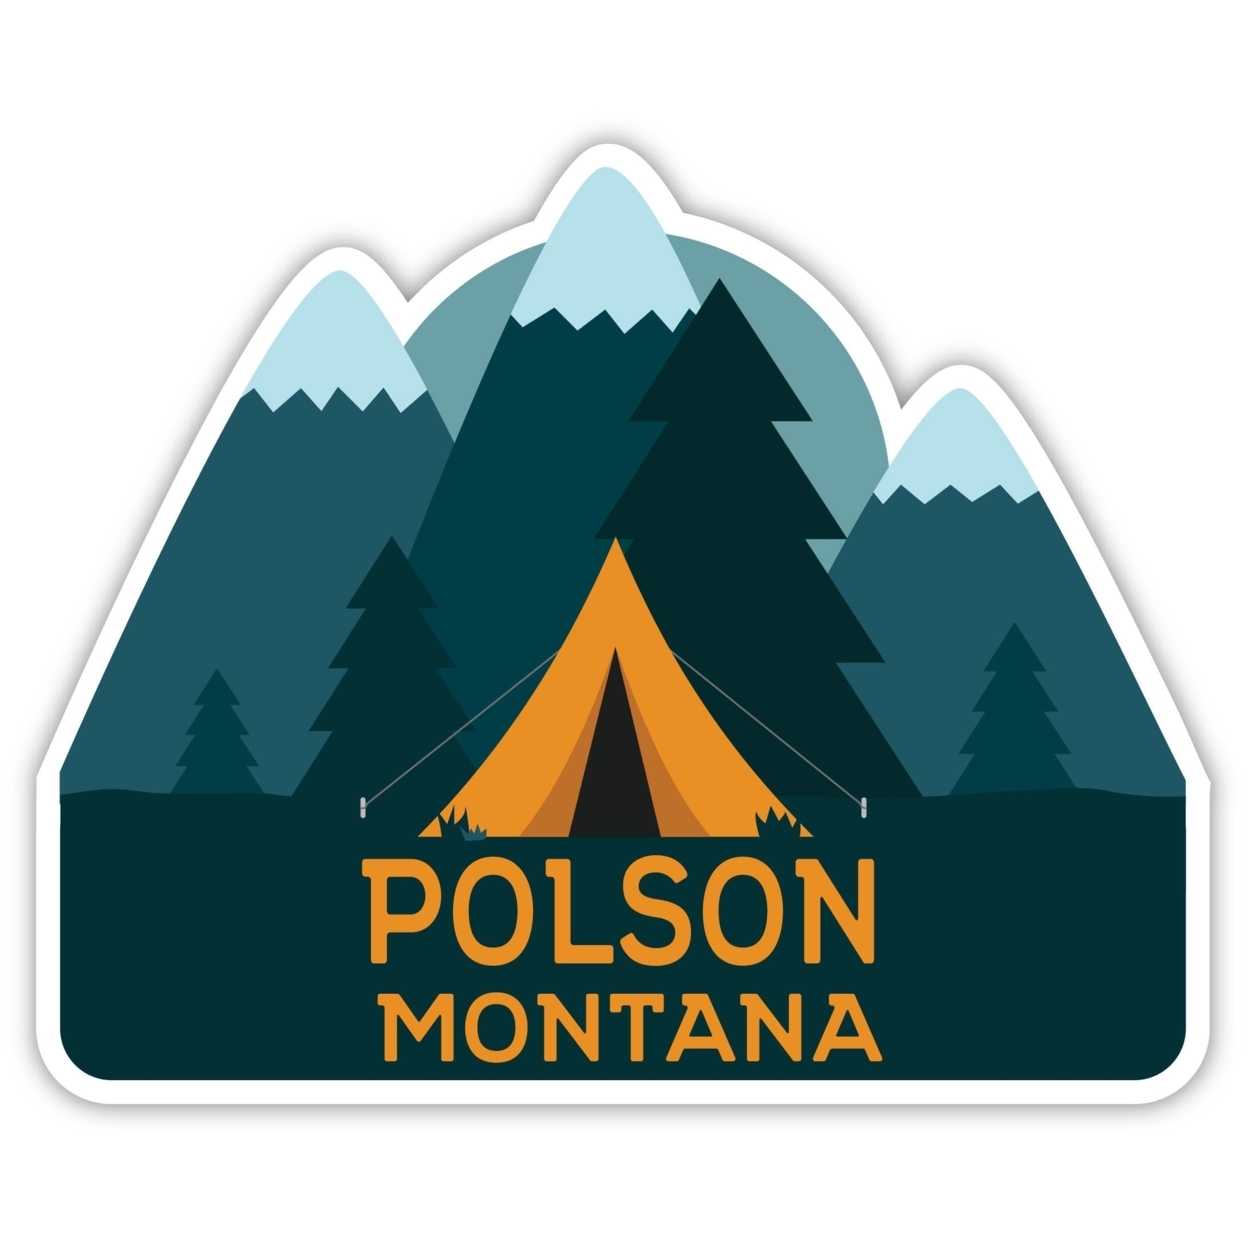 Polson Montana Souvenir Decorative Stickers (Choose Theme And Size) - Single Unit, 4-Inch, Tent